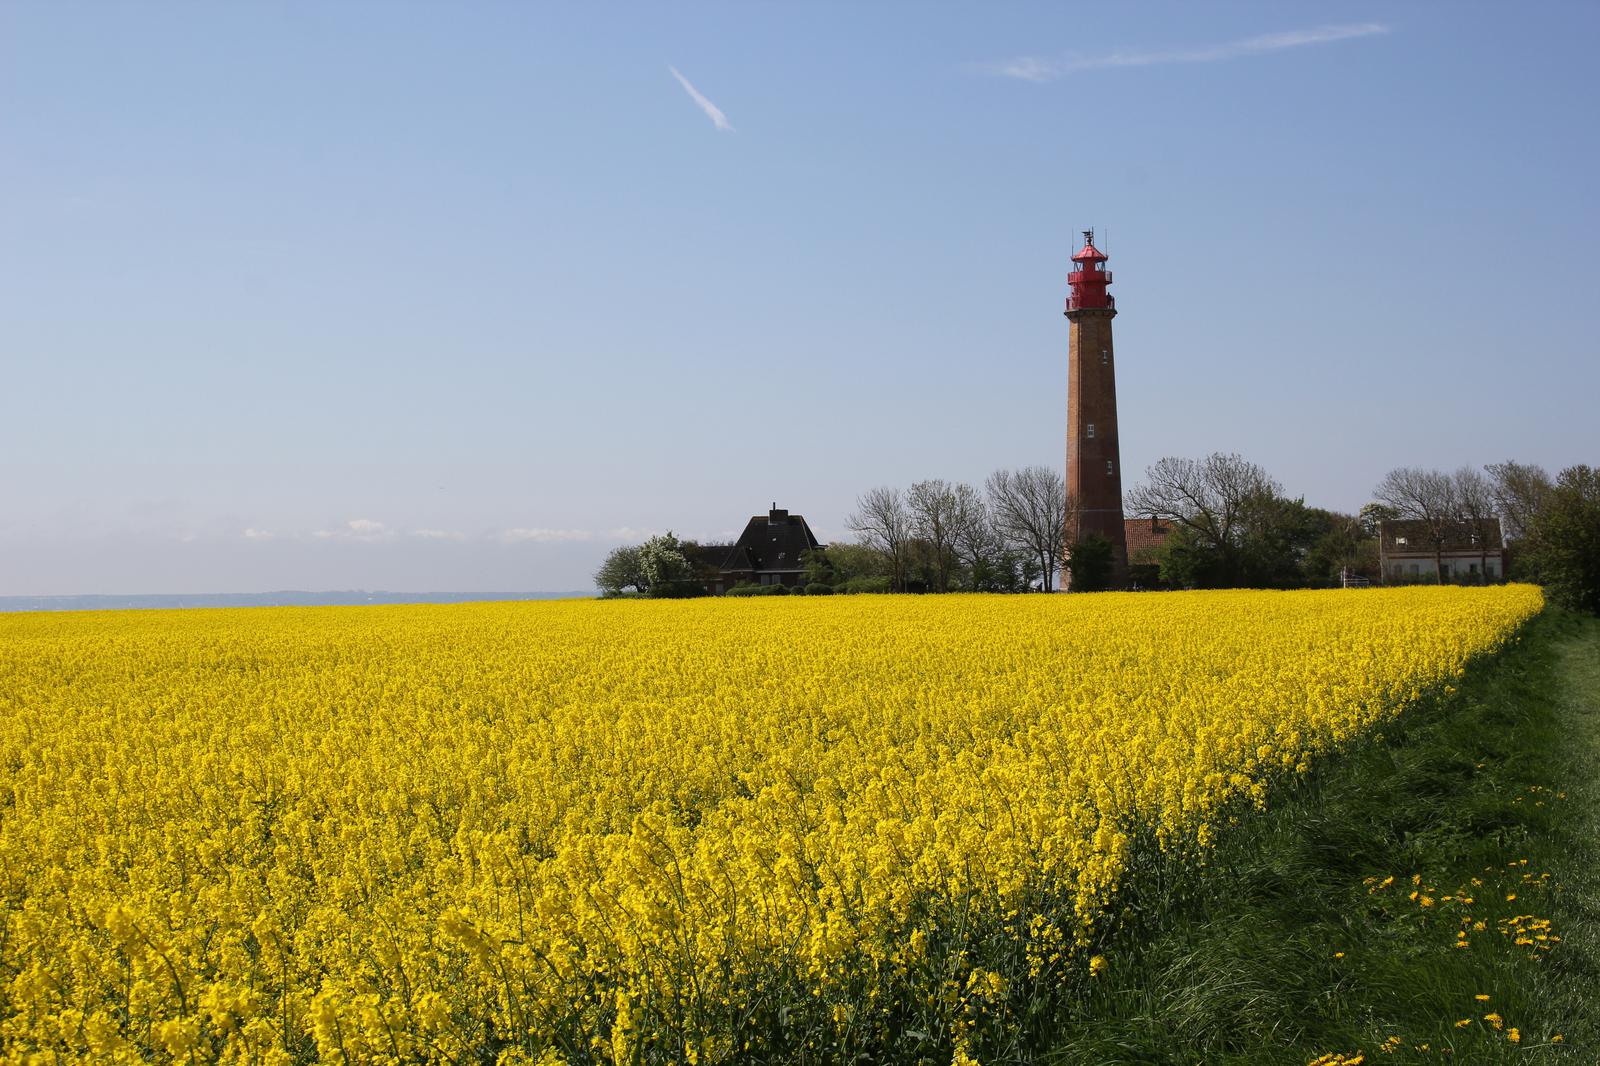 Fehmarn im Mai|Fehmarn|Ostsee|Ostseeinsel|Insel Fehmarn|Leuchtturm|Rapsfeld|Inselurlaub|Schleswig-Holstein|Paarurlaub|Familienurlaub|Urlaub mit Freunden